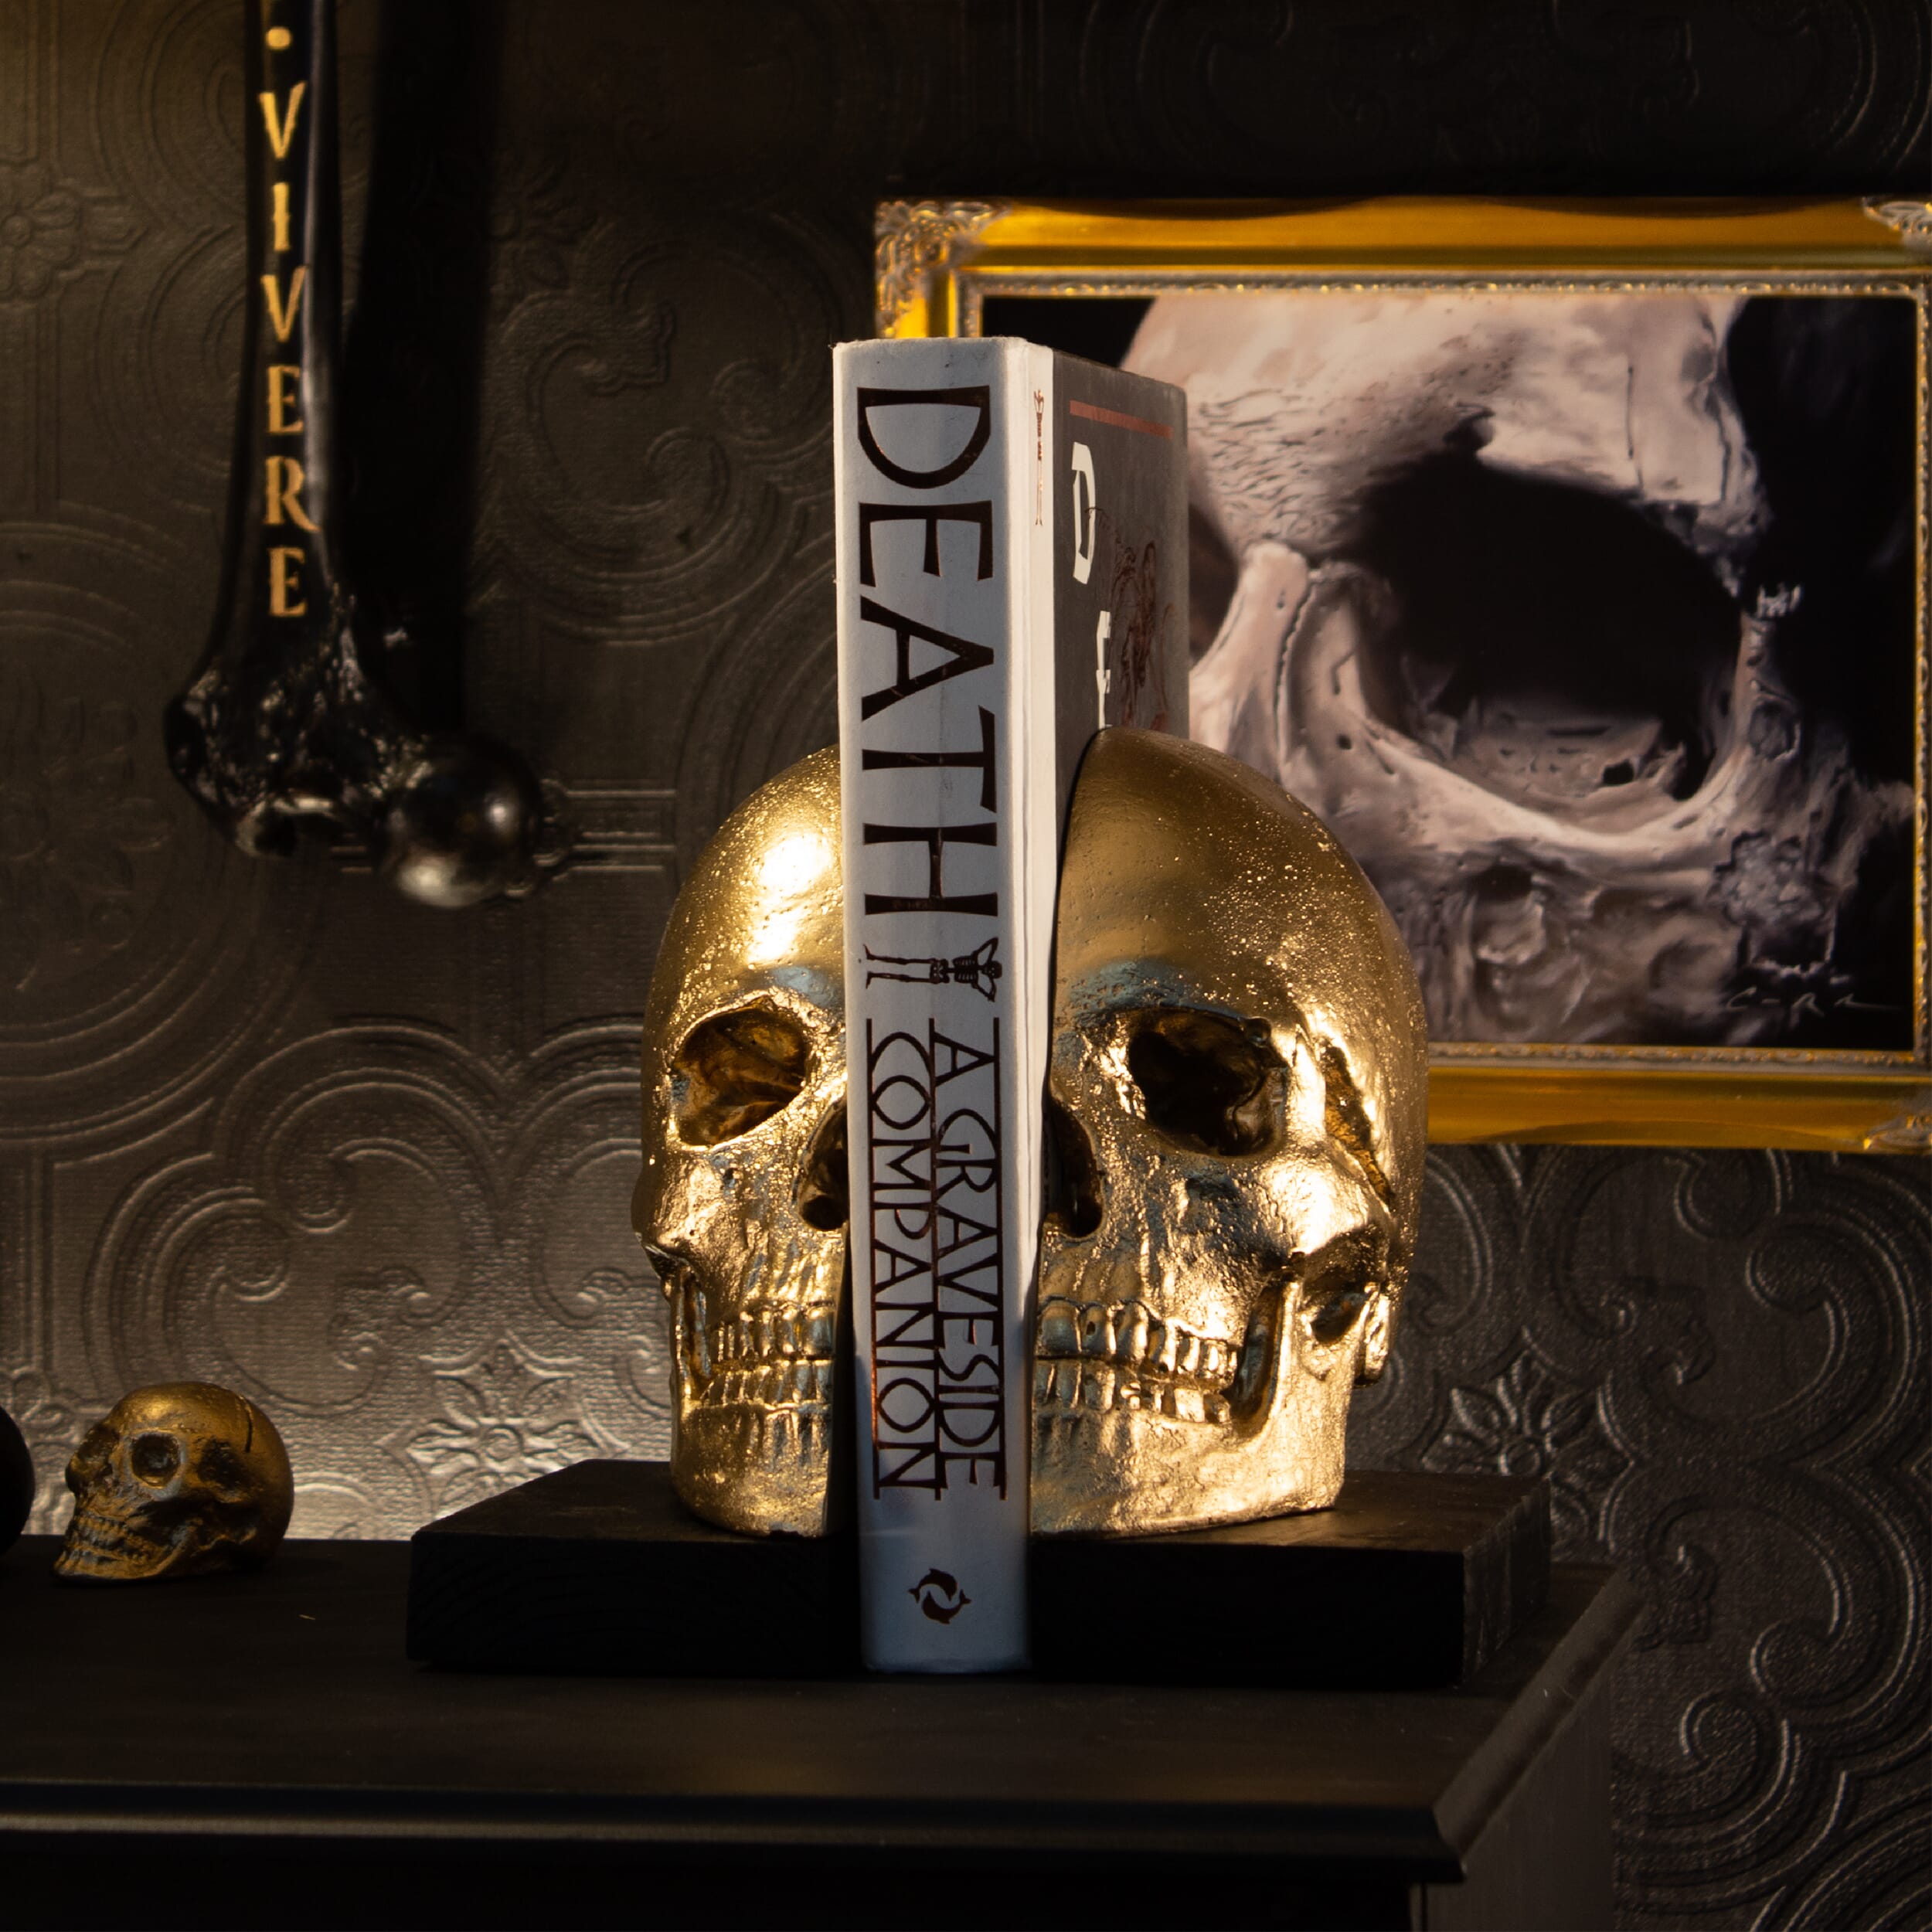 Skull bookmarks - The Blackened Teeth - gold